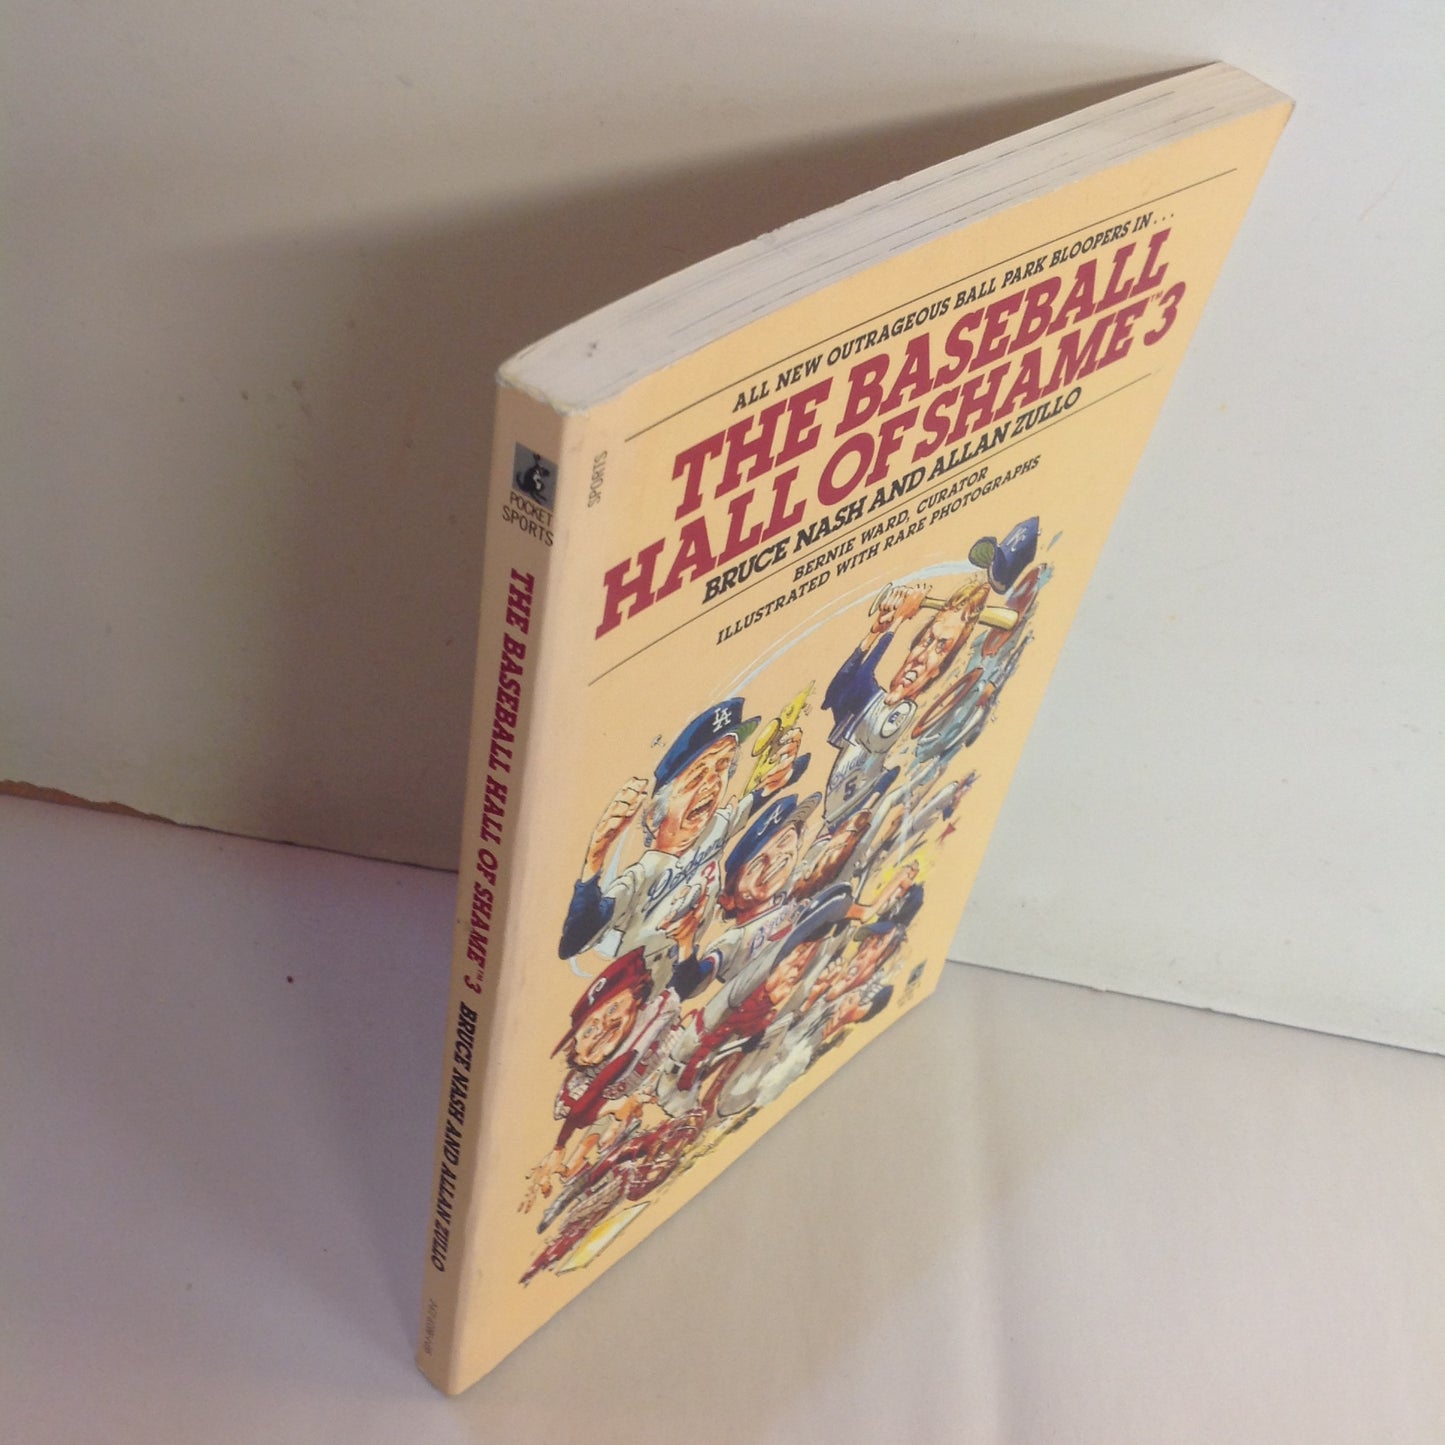 Vintage 1987 Trade Paperback The Baseball Hall of Shame 3 Bruce Nash and Allan Zullo